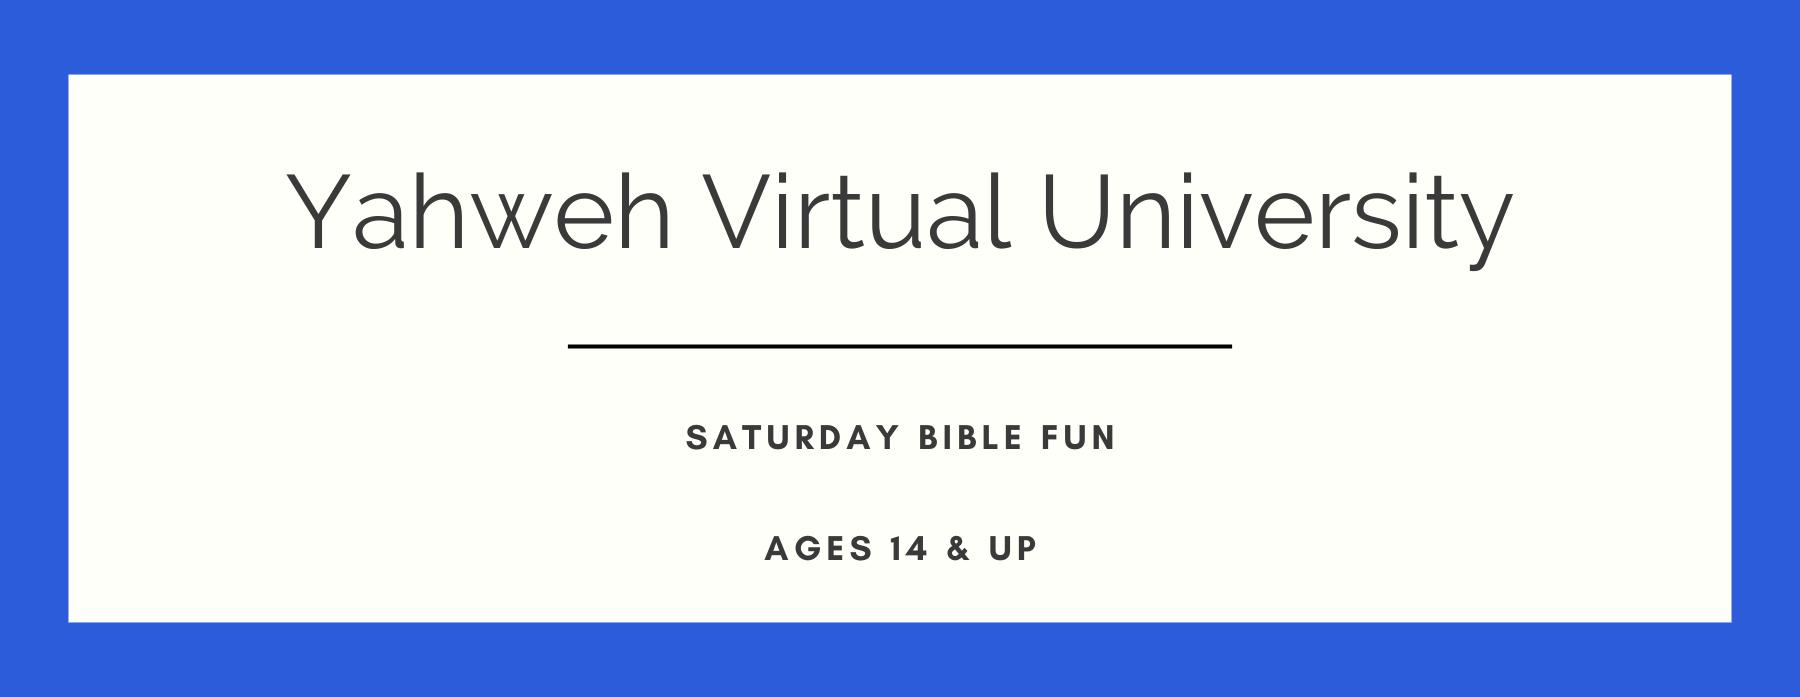 Yahweh Virtual University Saturday Bible Fun Ages 14 & Up